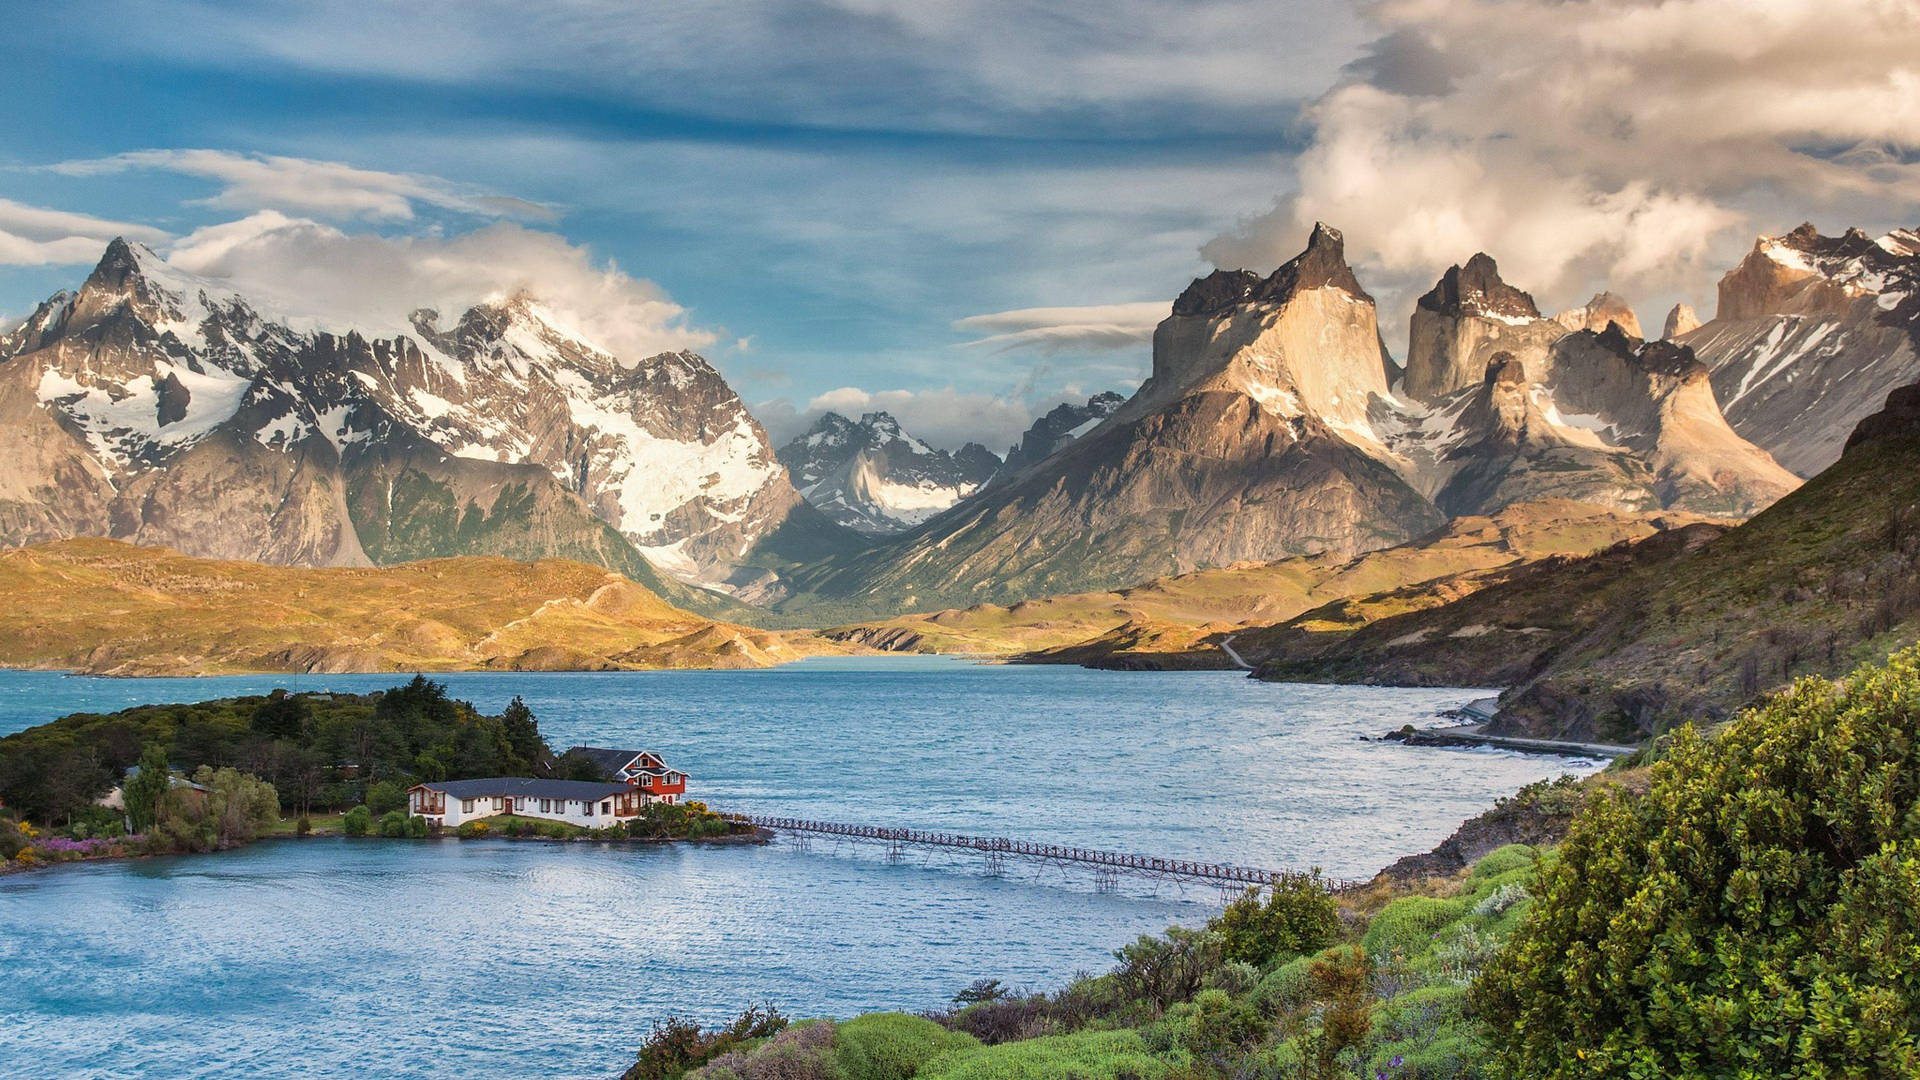 Patagonia Huge Lake With Houses